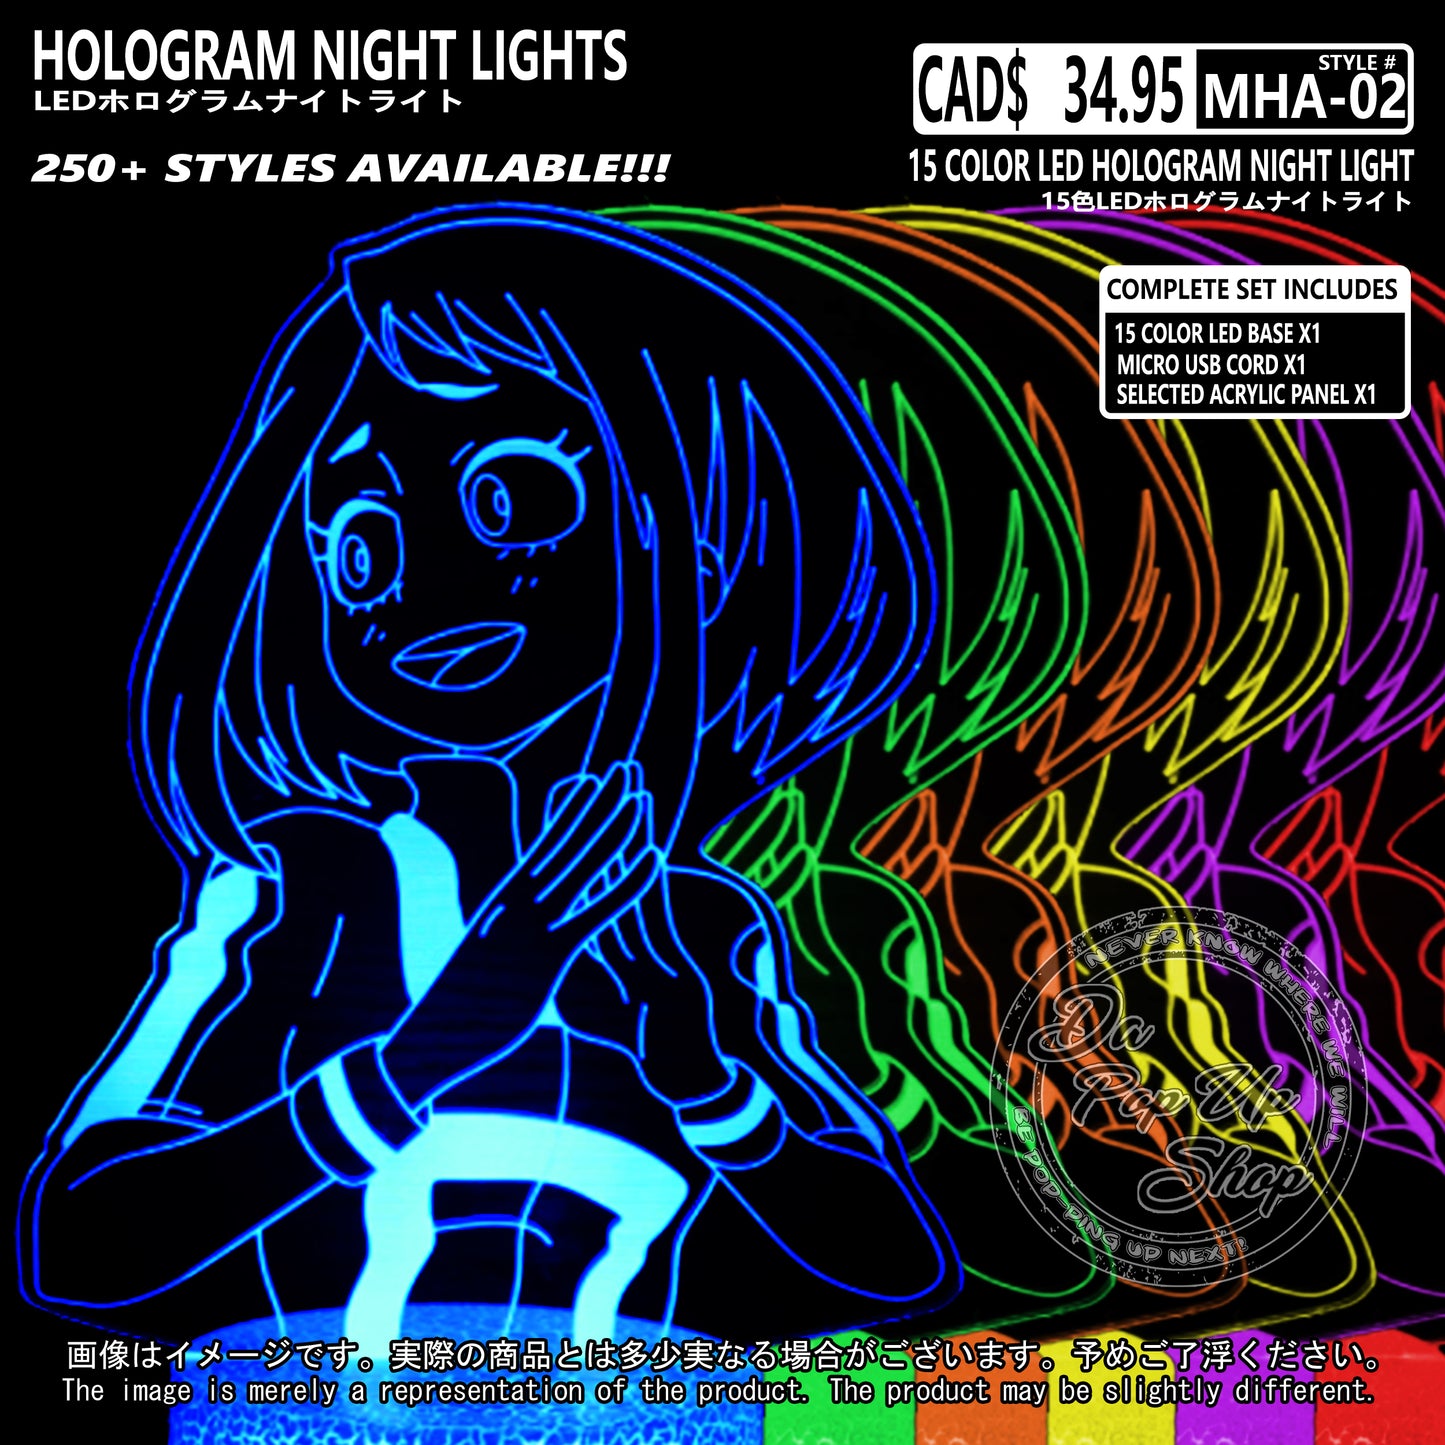 (MHA-02) My Hero Academia Hologram LED Night Light